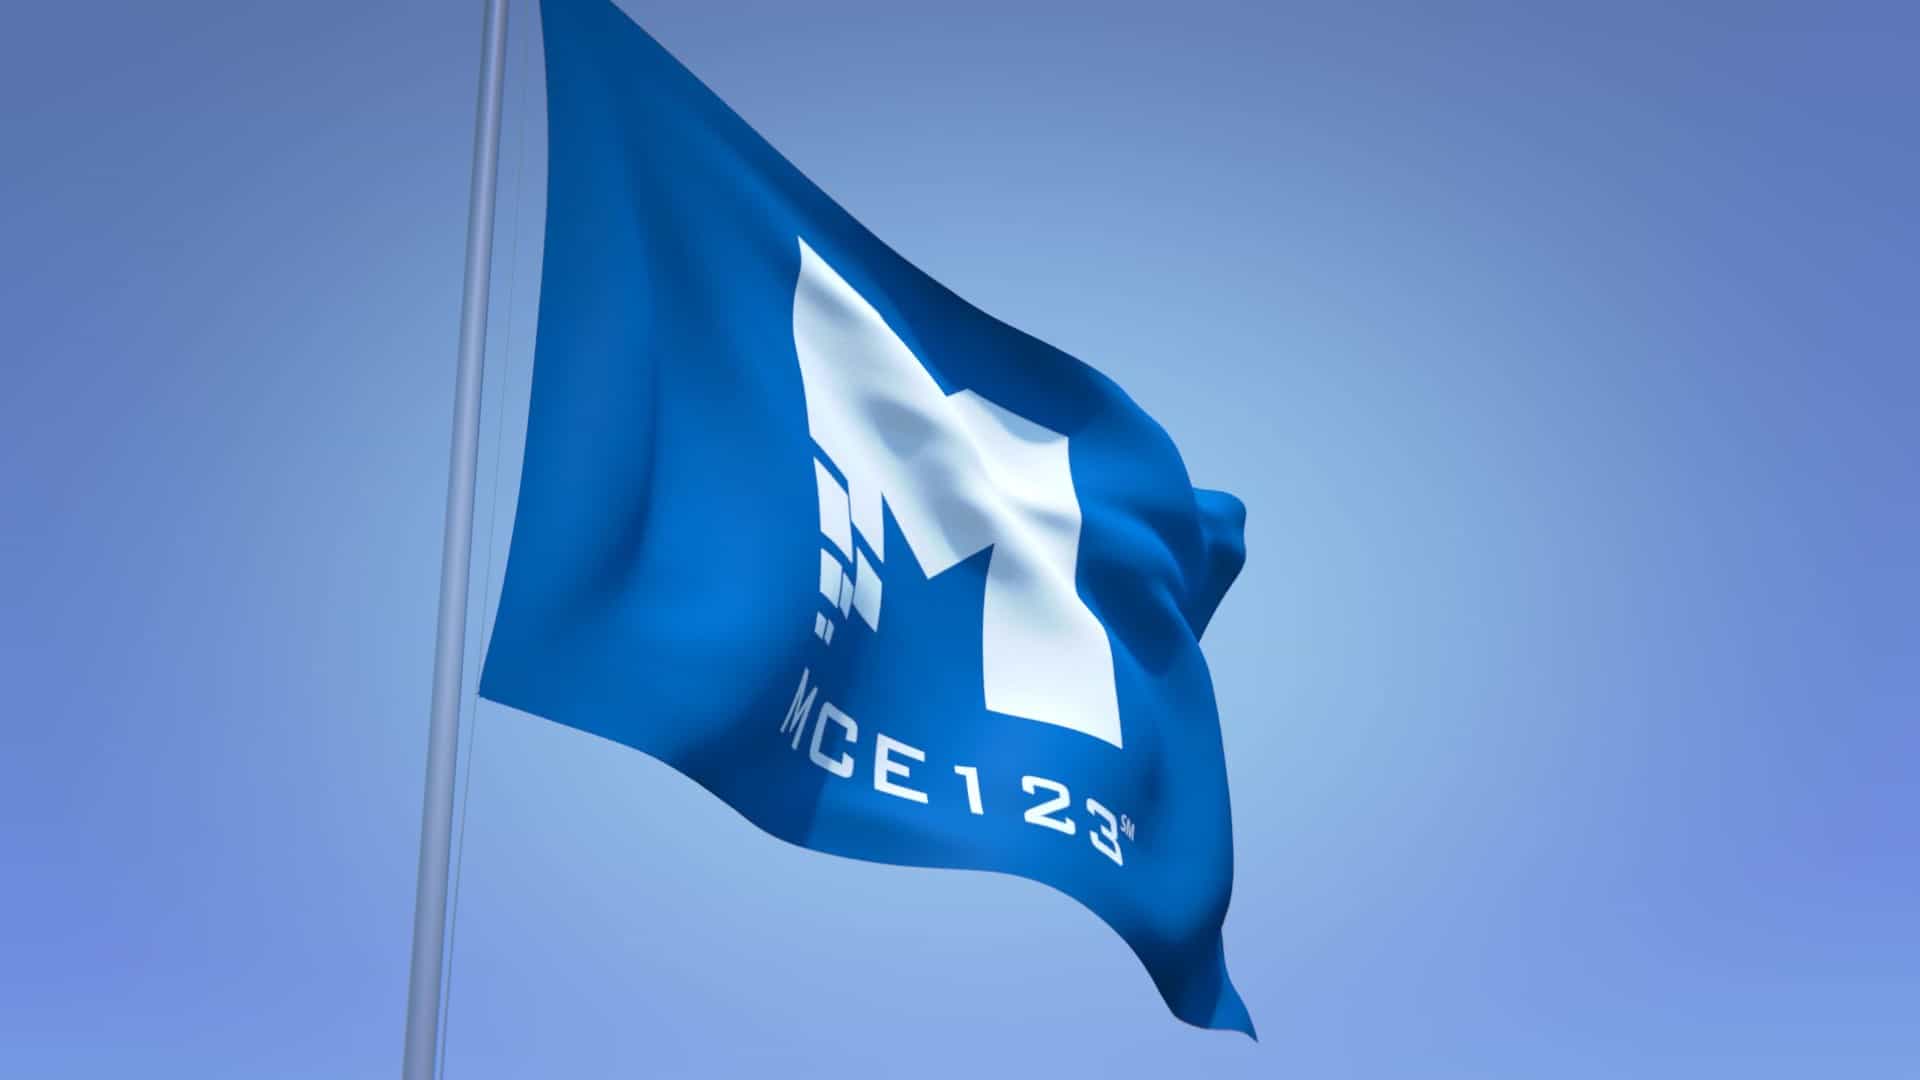 MCE123 Flag Logo Intro Video